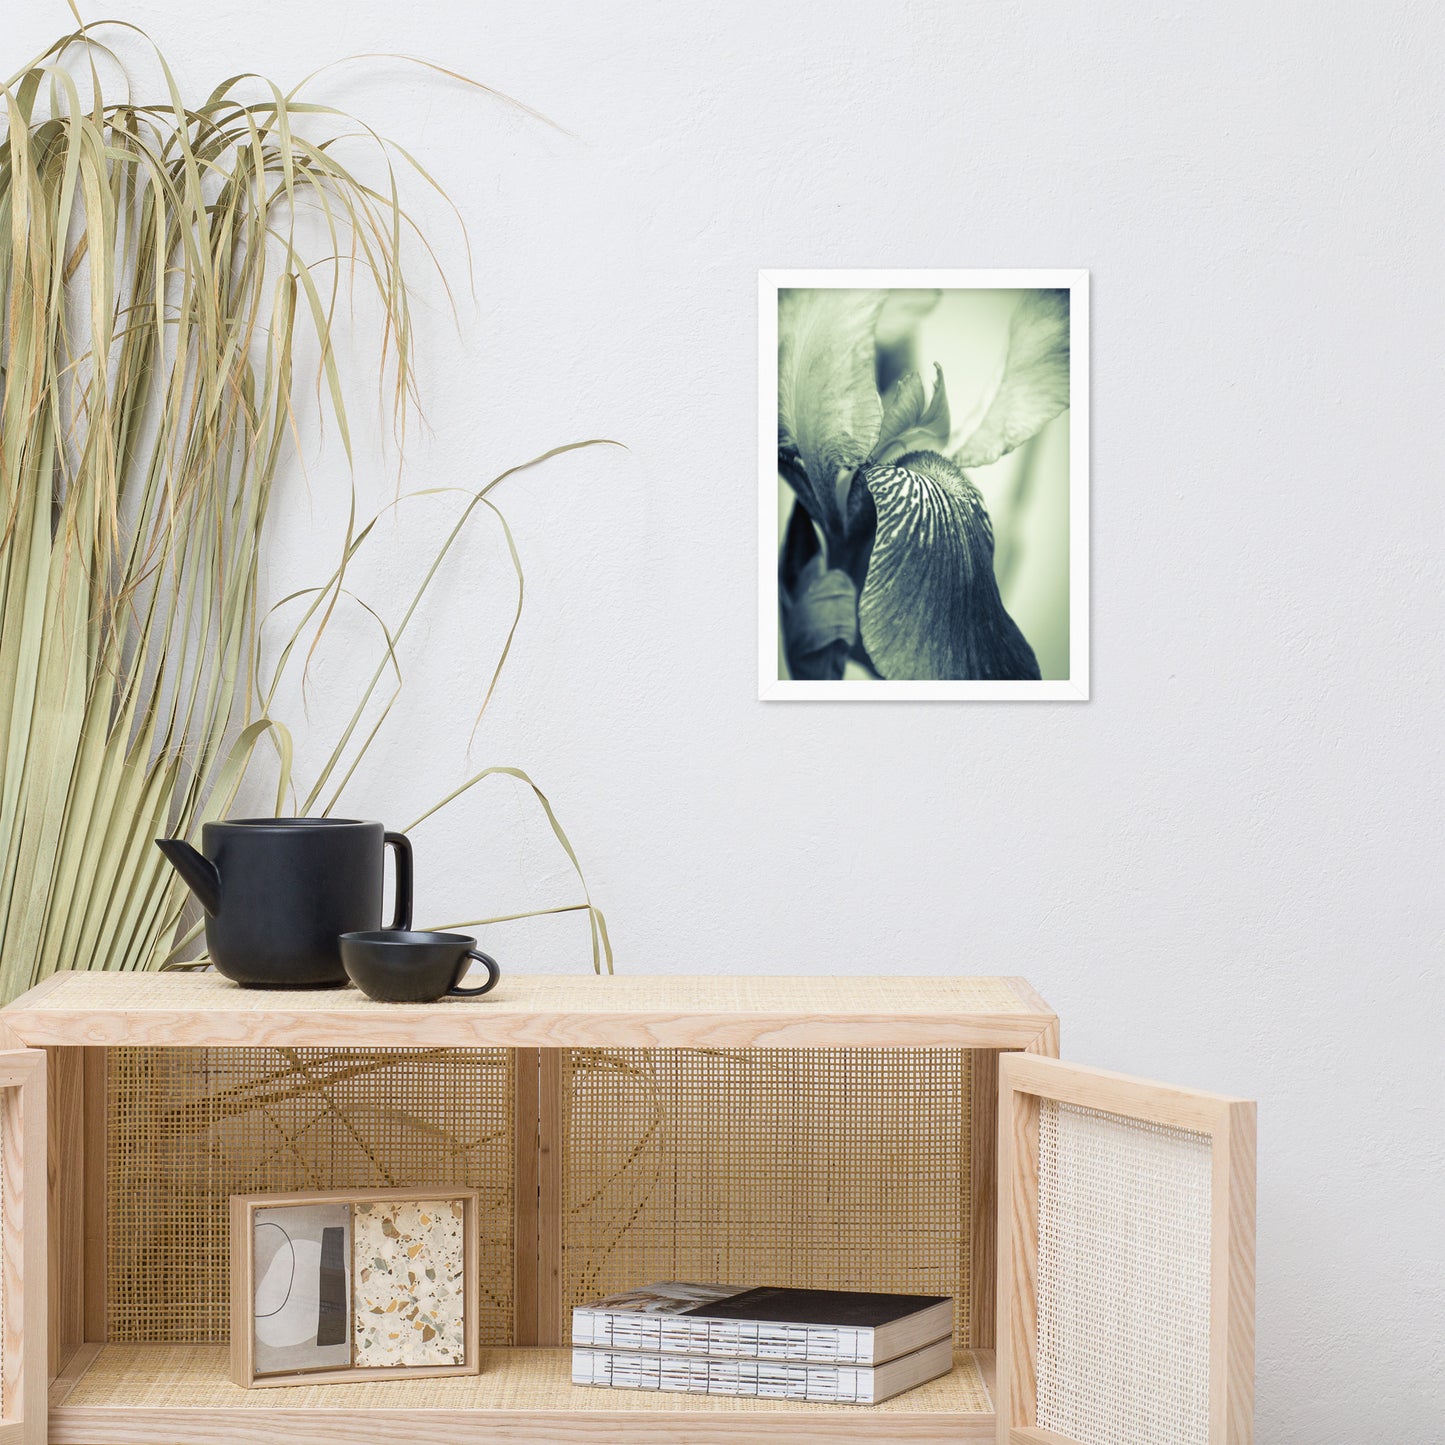 Dining Room Art Ideas: Abstract Japanese Iris Delight- Botanical / Floral / Flora / Flowers / Nature Photograph Framed Wall Art Print - Artwork - Wall Decor - Home Decor